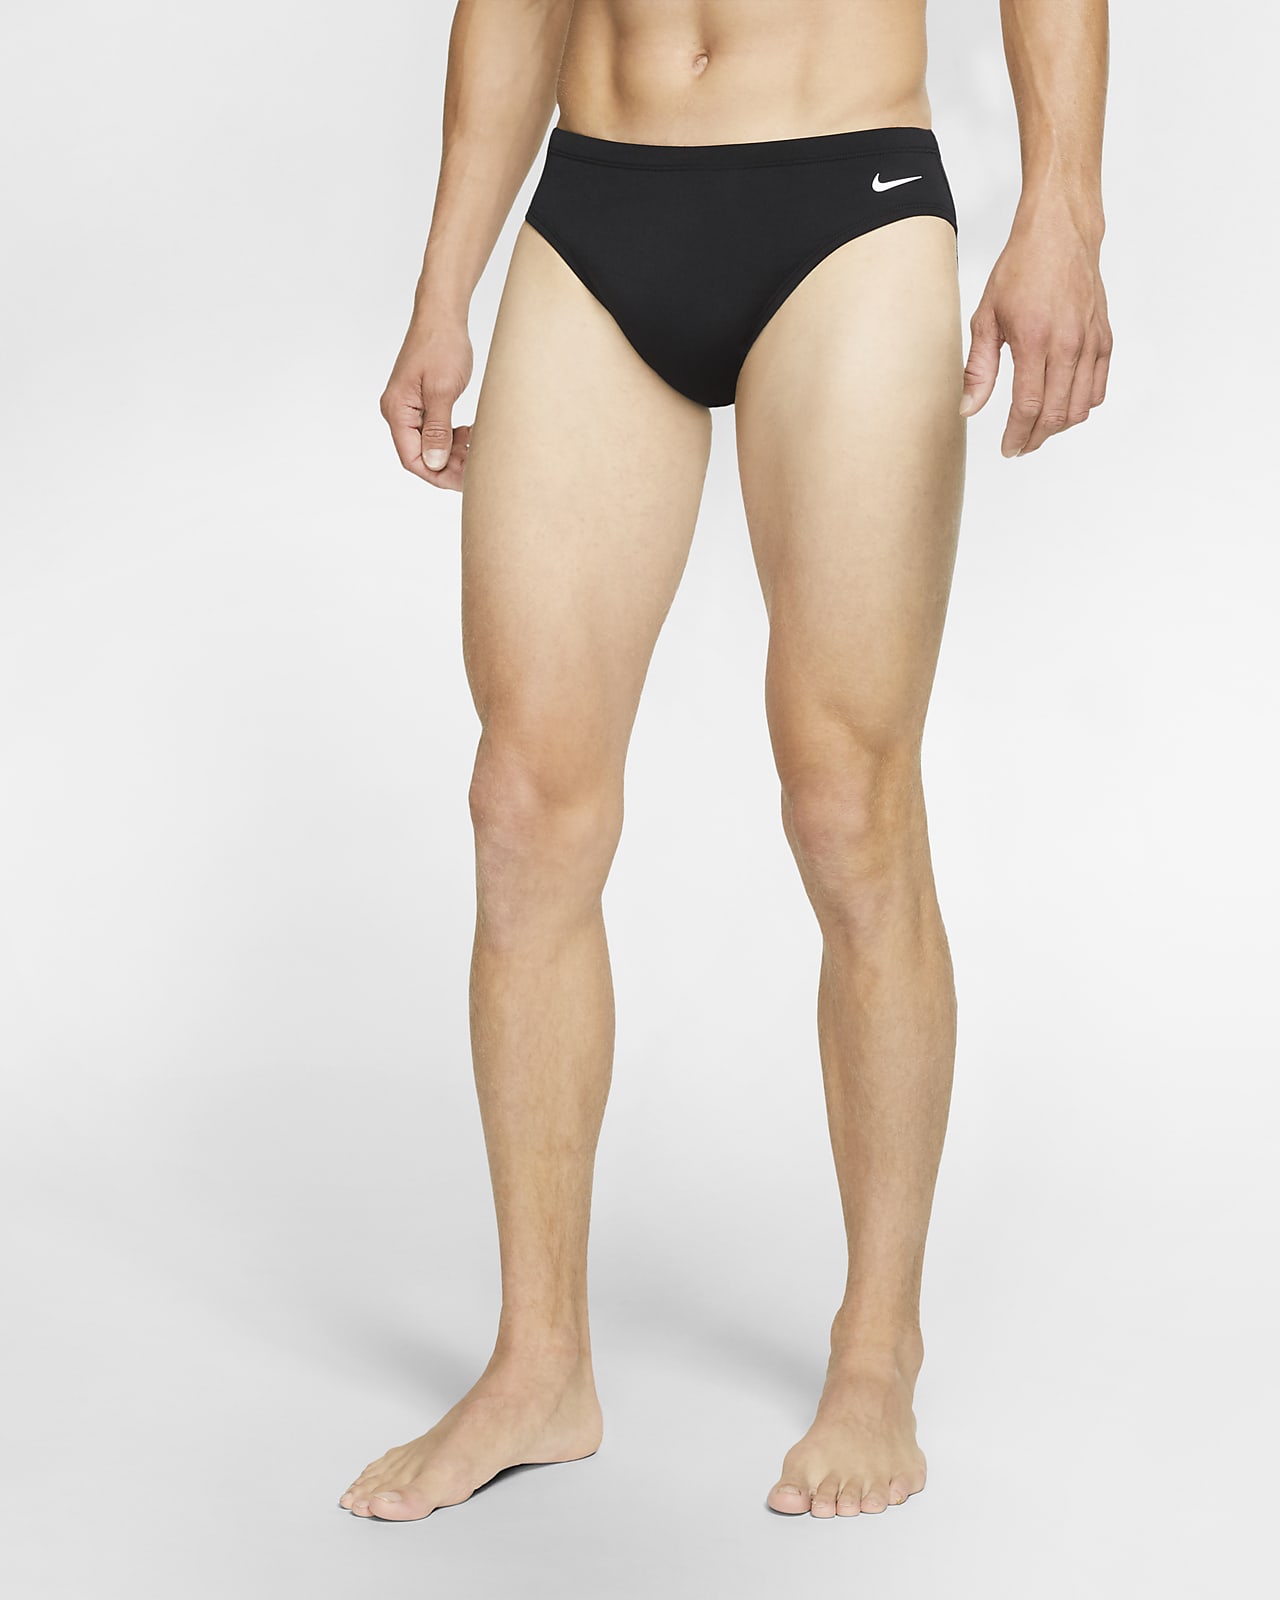 Nike Solid Men's Swimming Briefs.